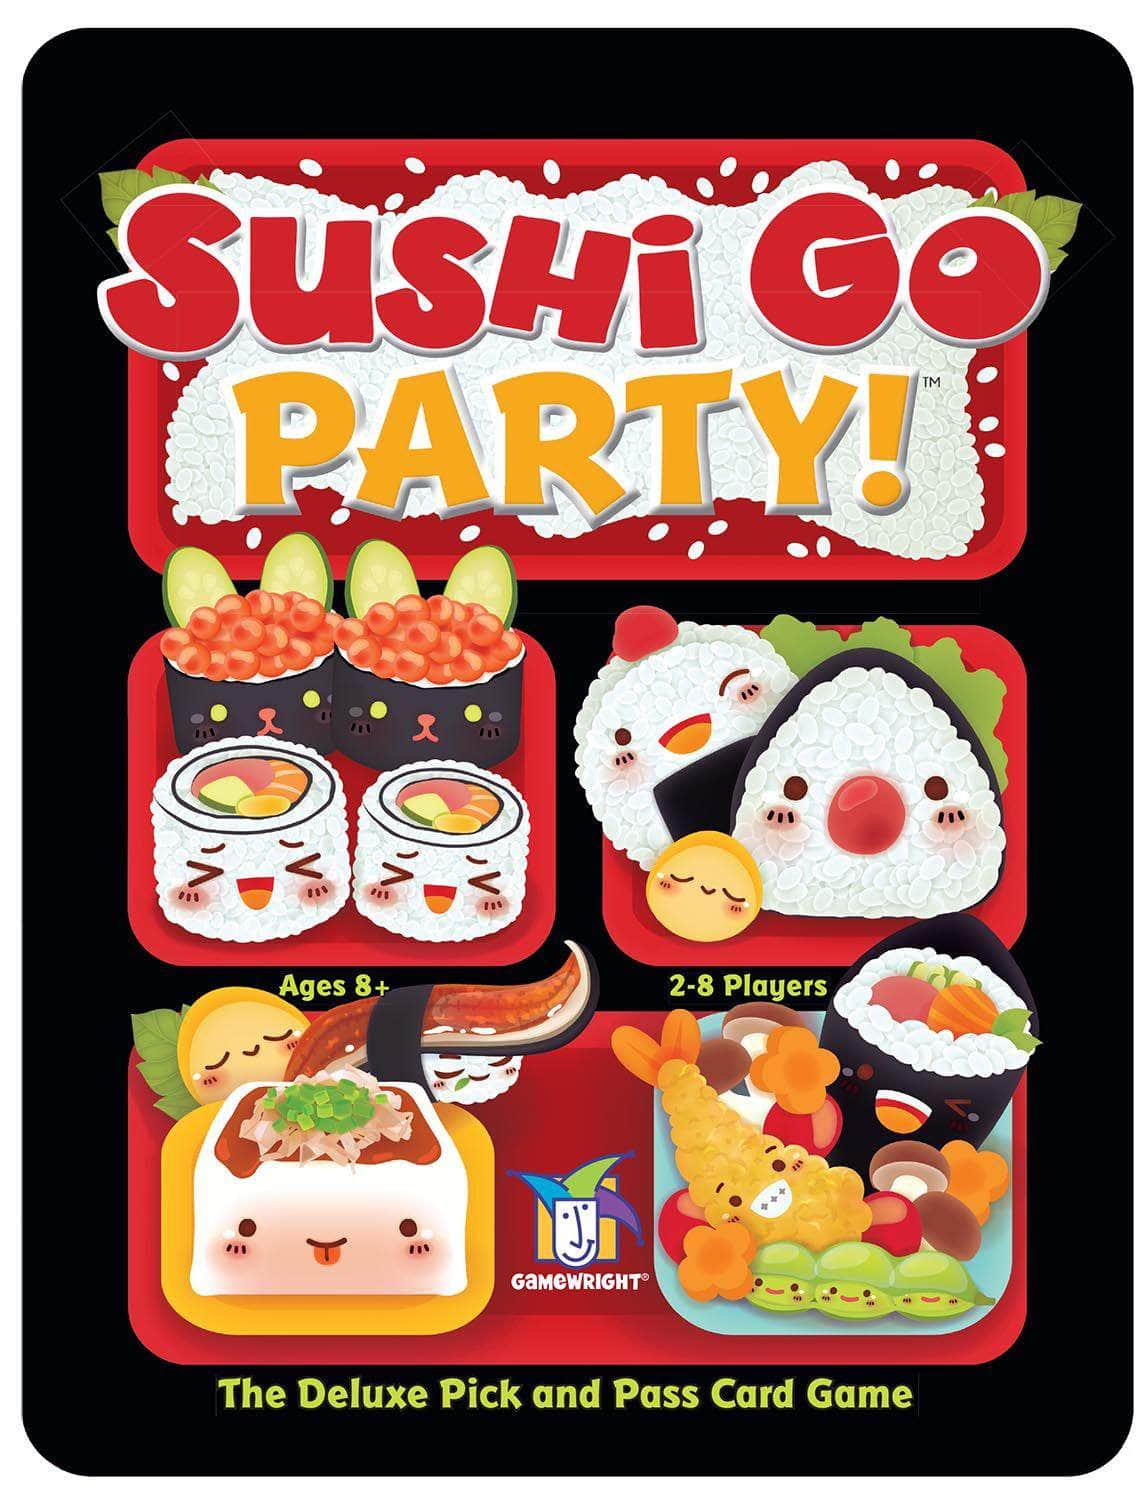 Sushi Go Party! Jogo de tabuleiro de varejo Gamewright, Devir, Rebelde, uplay.it edizioni, jogos de duendes brancos, zoch verlag ks800484a